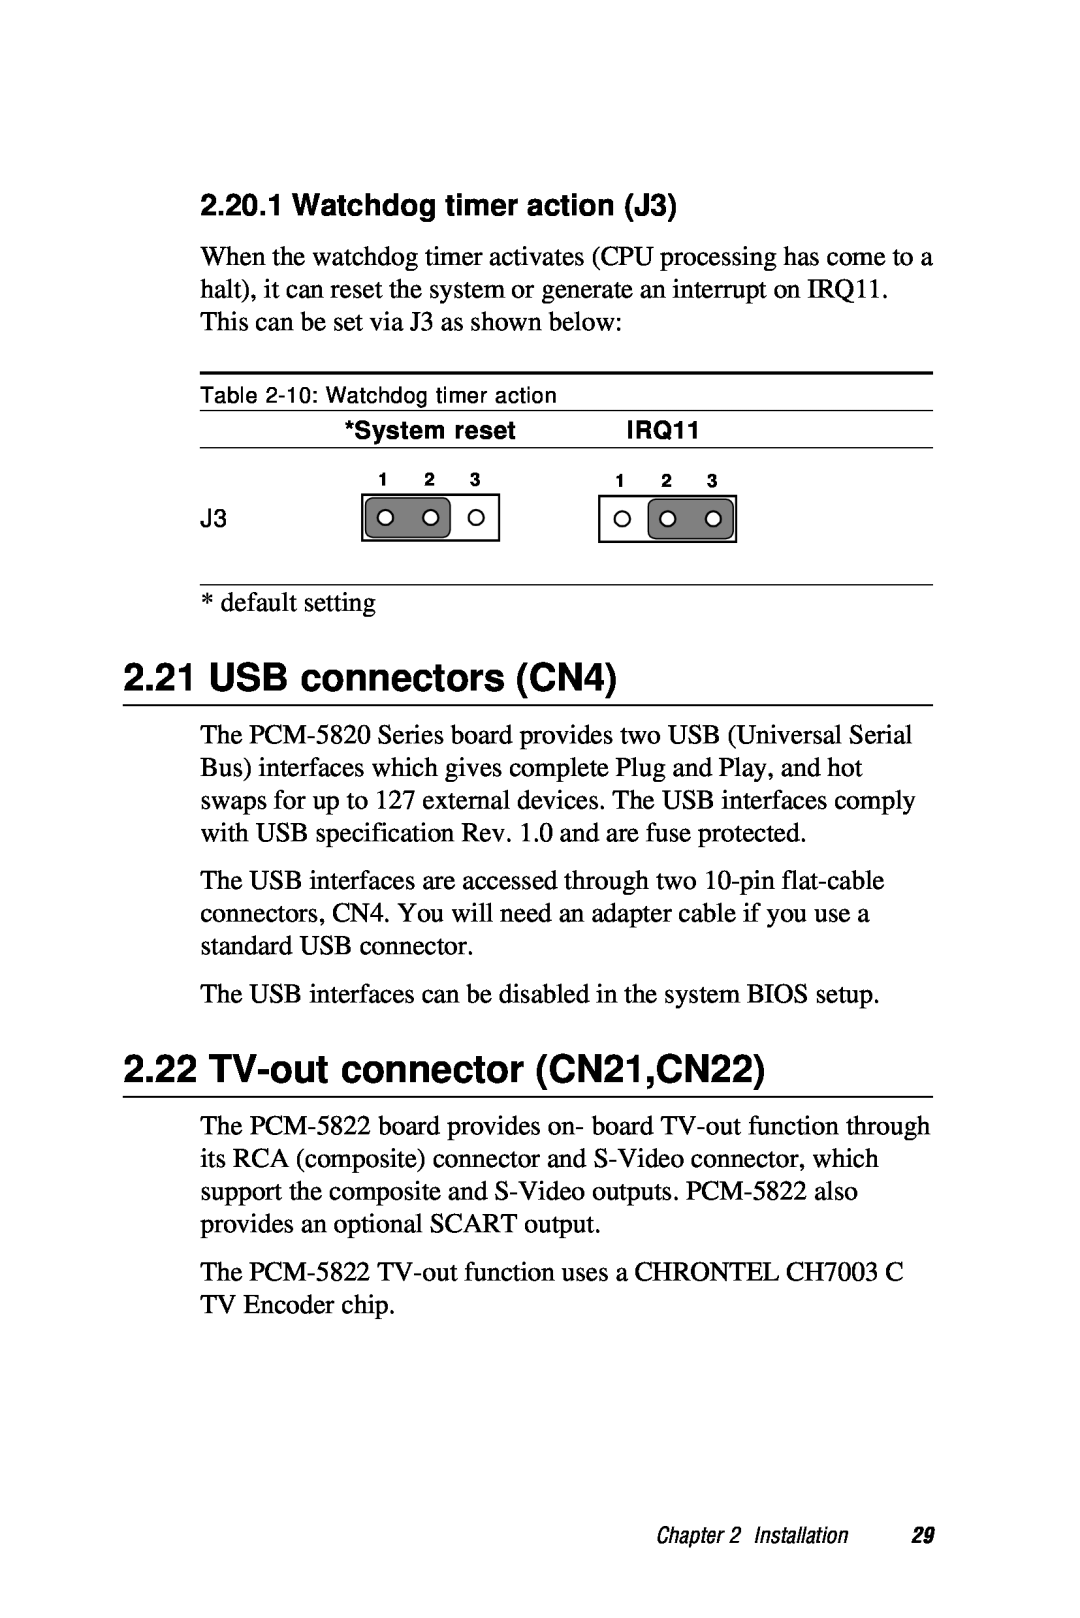 AMD PCM-5820 manual USB connectors CN4, TV-out connector CN21,CN22, Watchdog timer action J3 